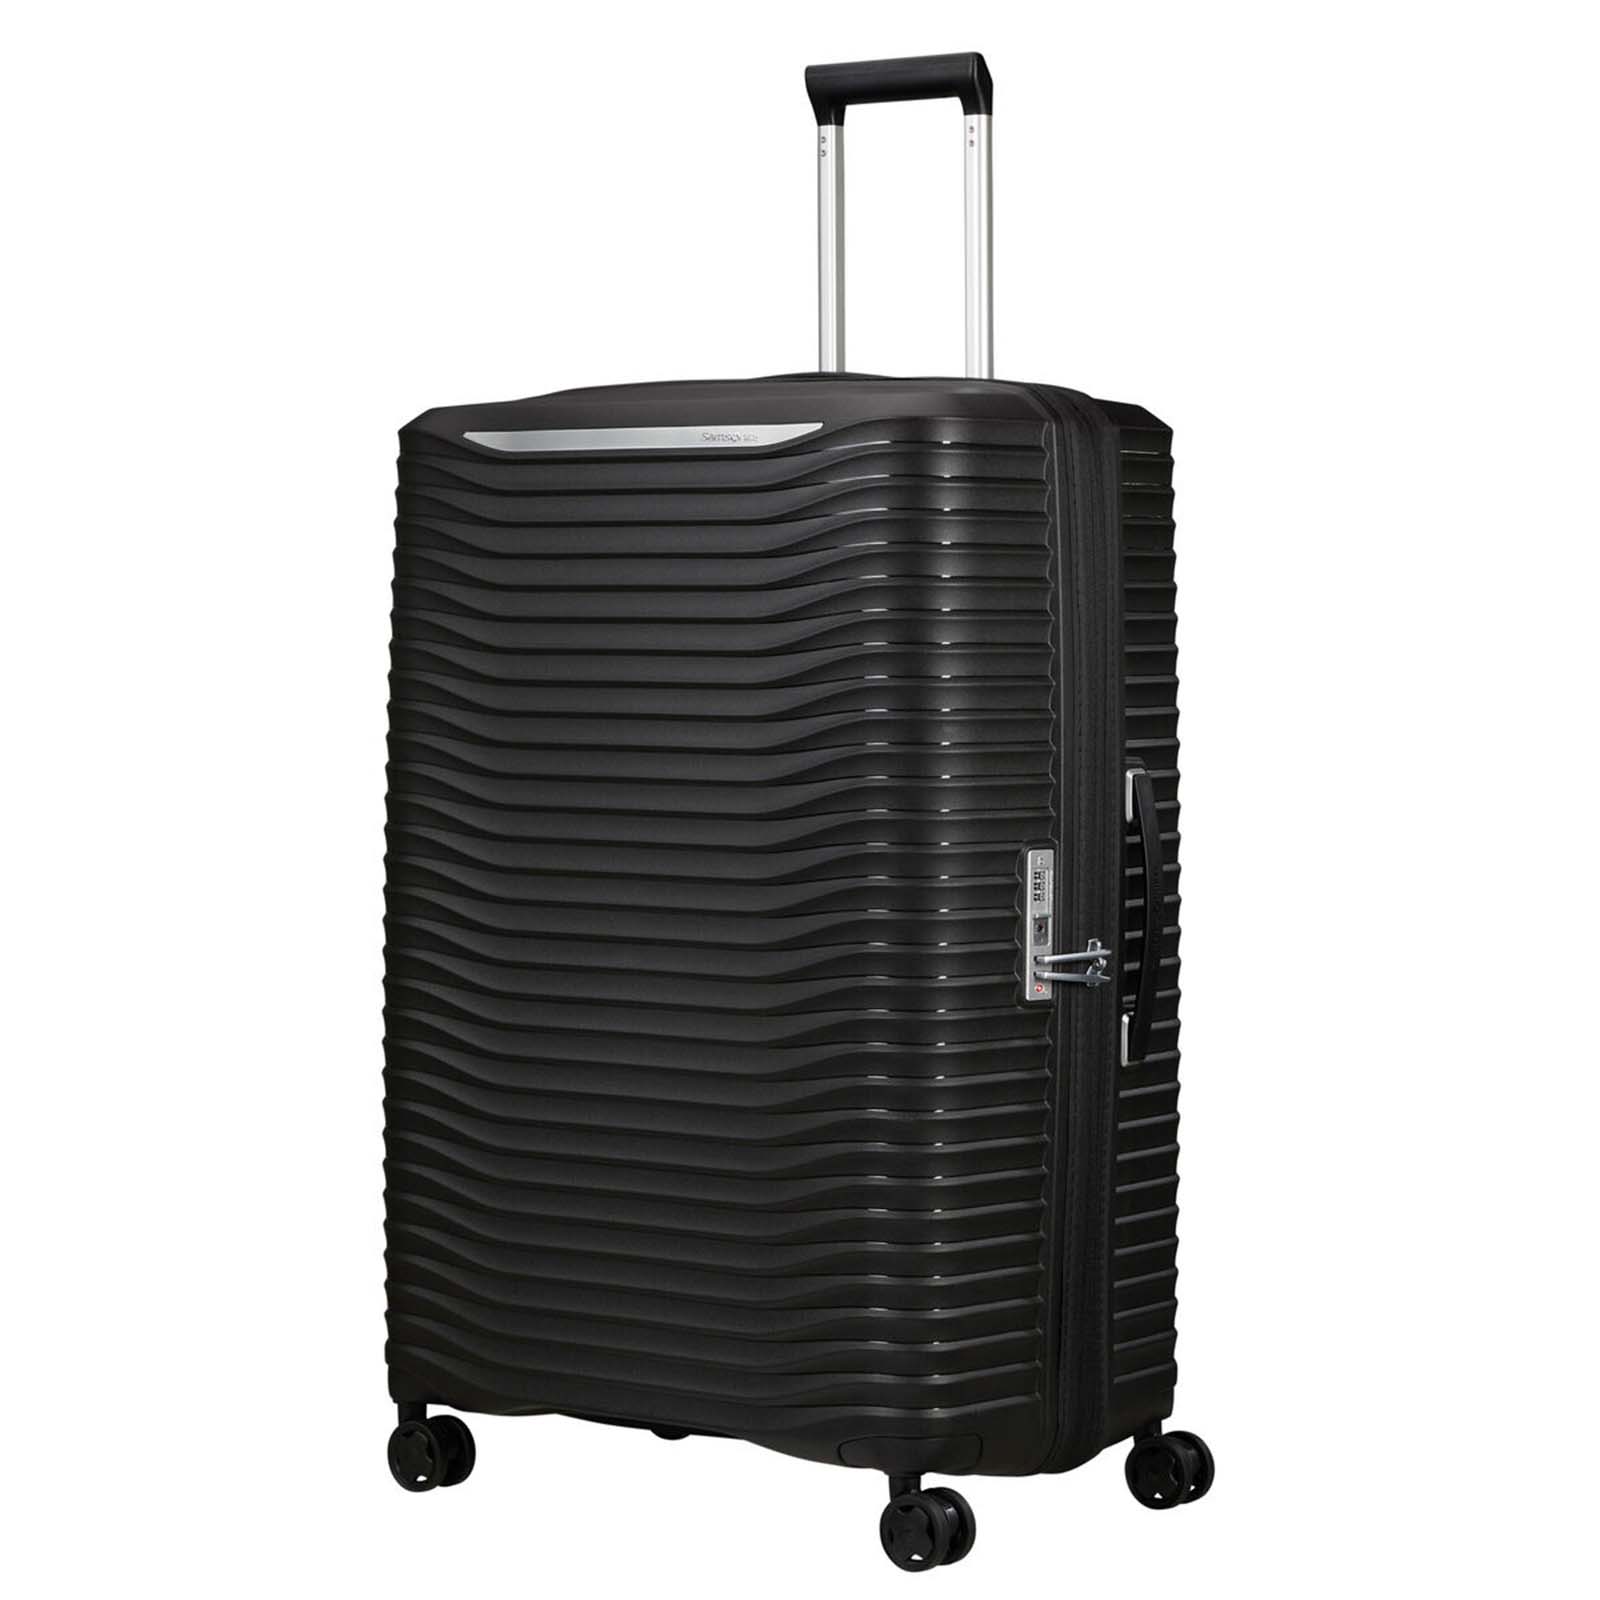 Samsonite-Upscape-81cm-Suitcase-Black-Front-Angle